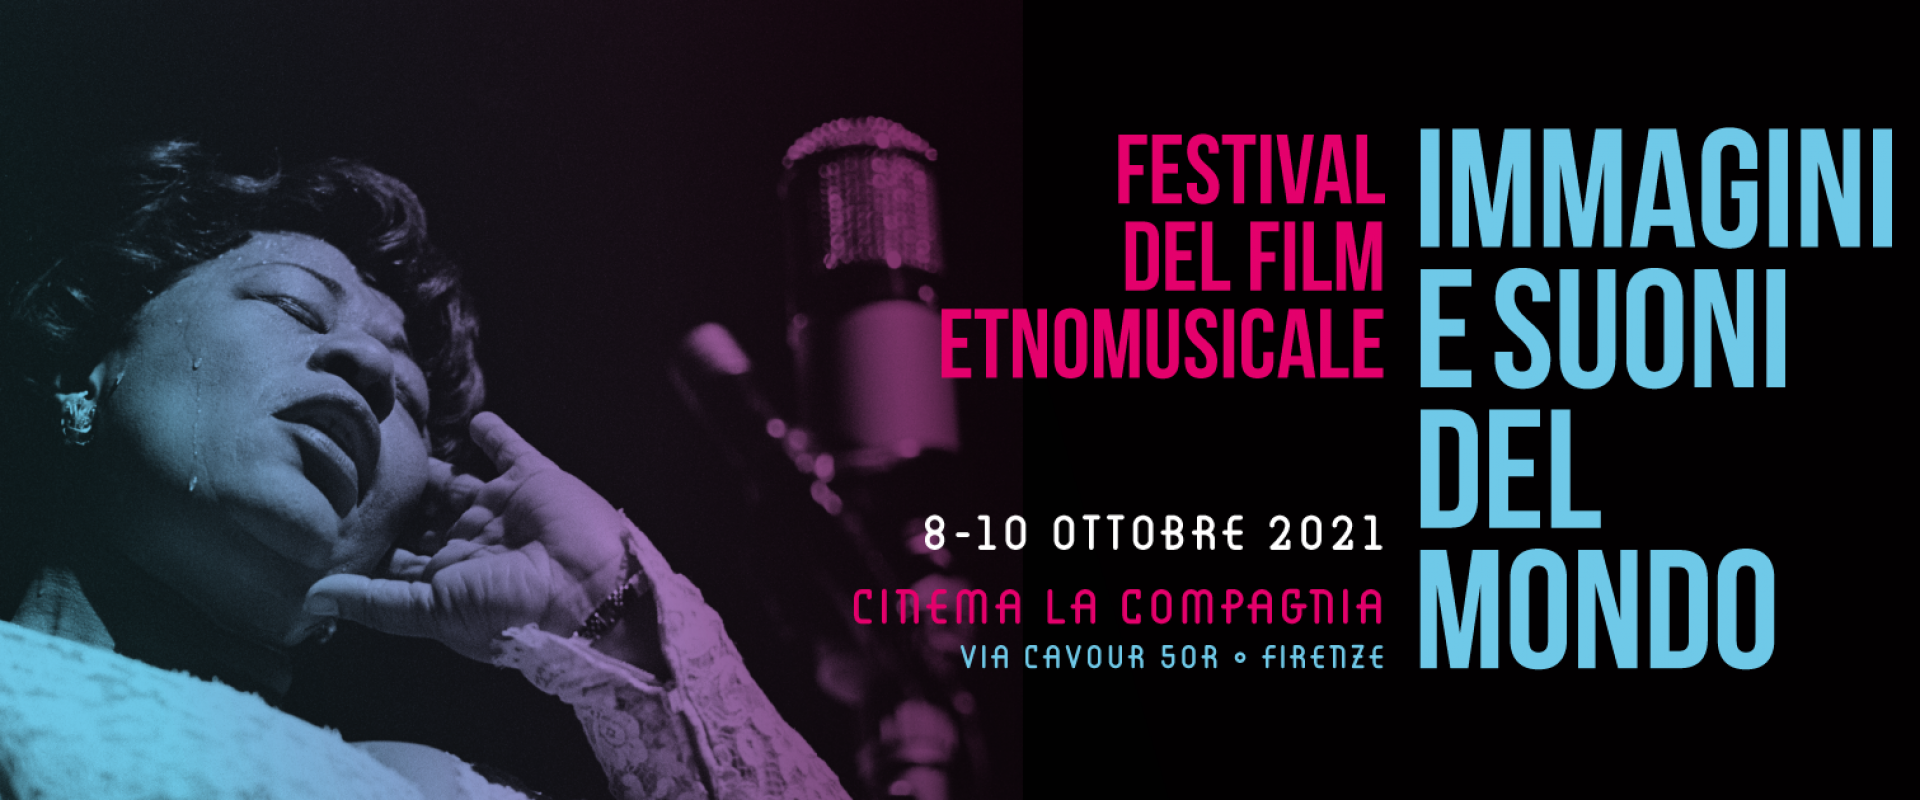 Festival del Film Etnomusicale 1990-1999